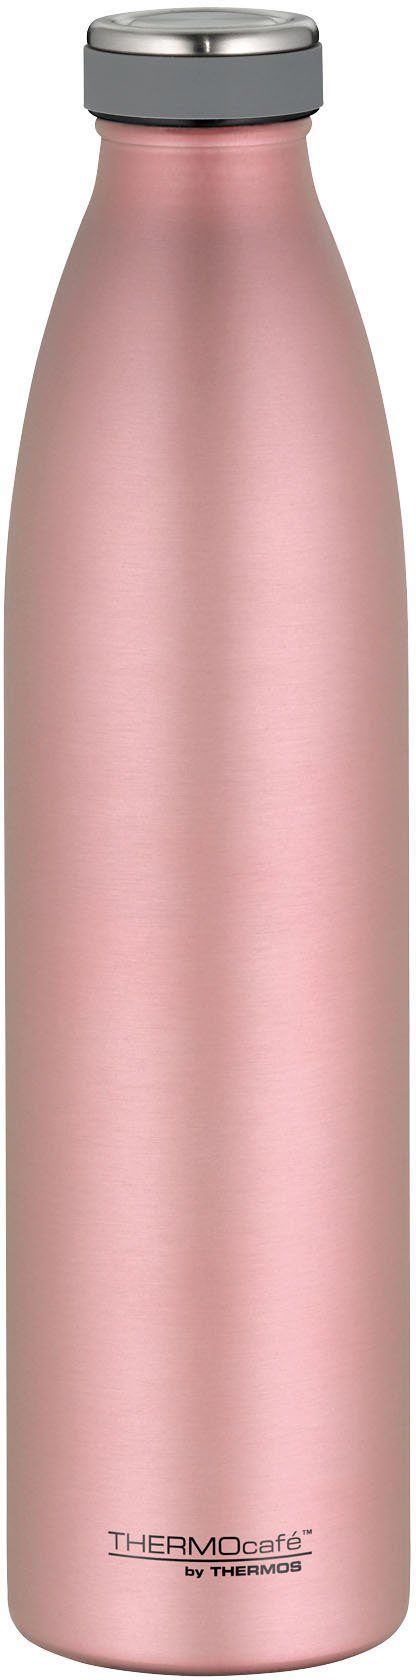 THERMOS Thermoflasche ThermoCaféTC Bottle, Edelstahl, schlankes Design rosa